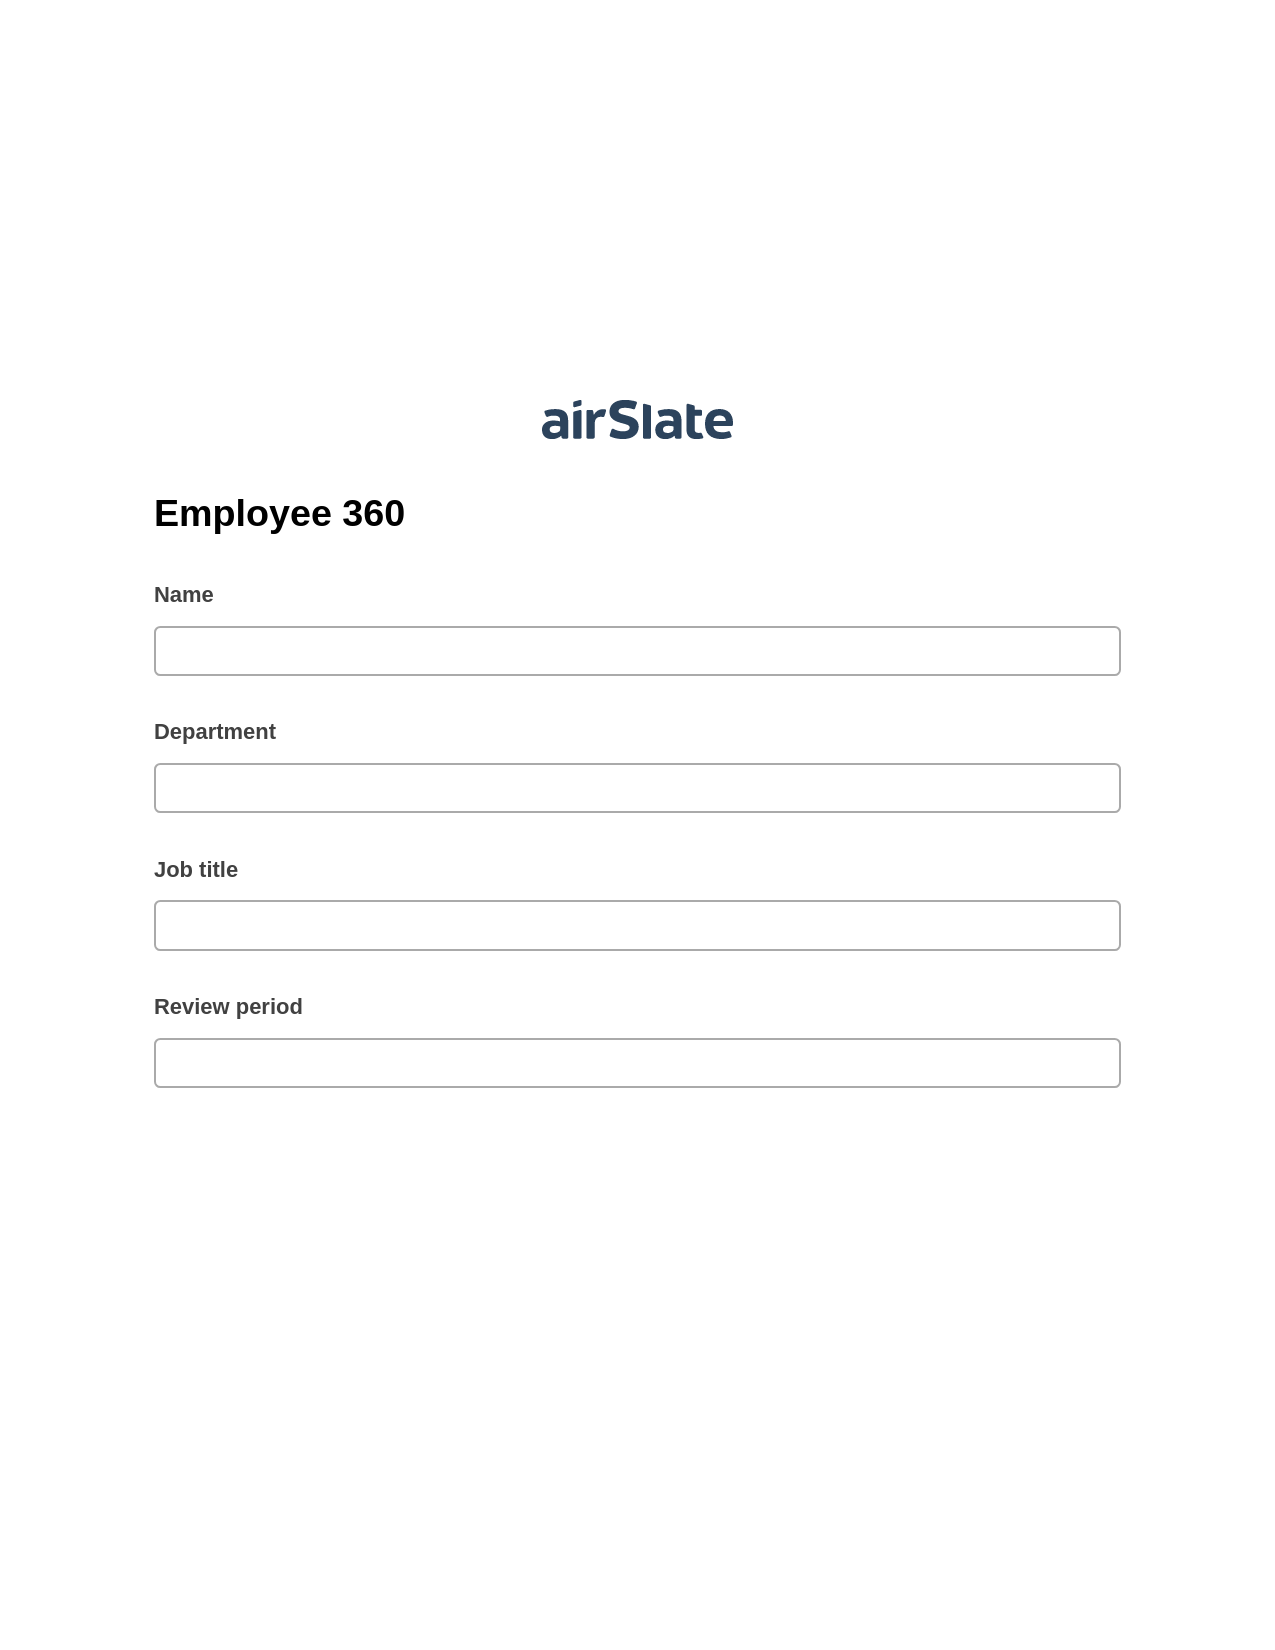 Employee 360 Pre-fill from Google Sheets Bot, Invoke Salesforce Process Bot, Archive to Box Bot